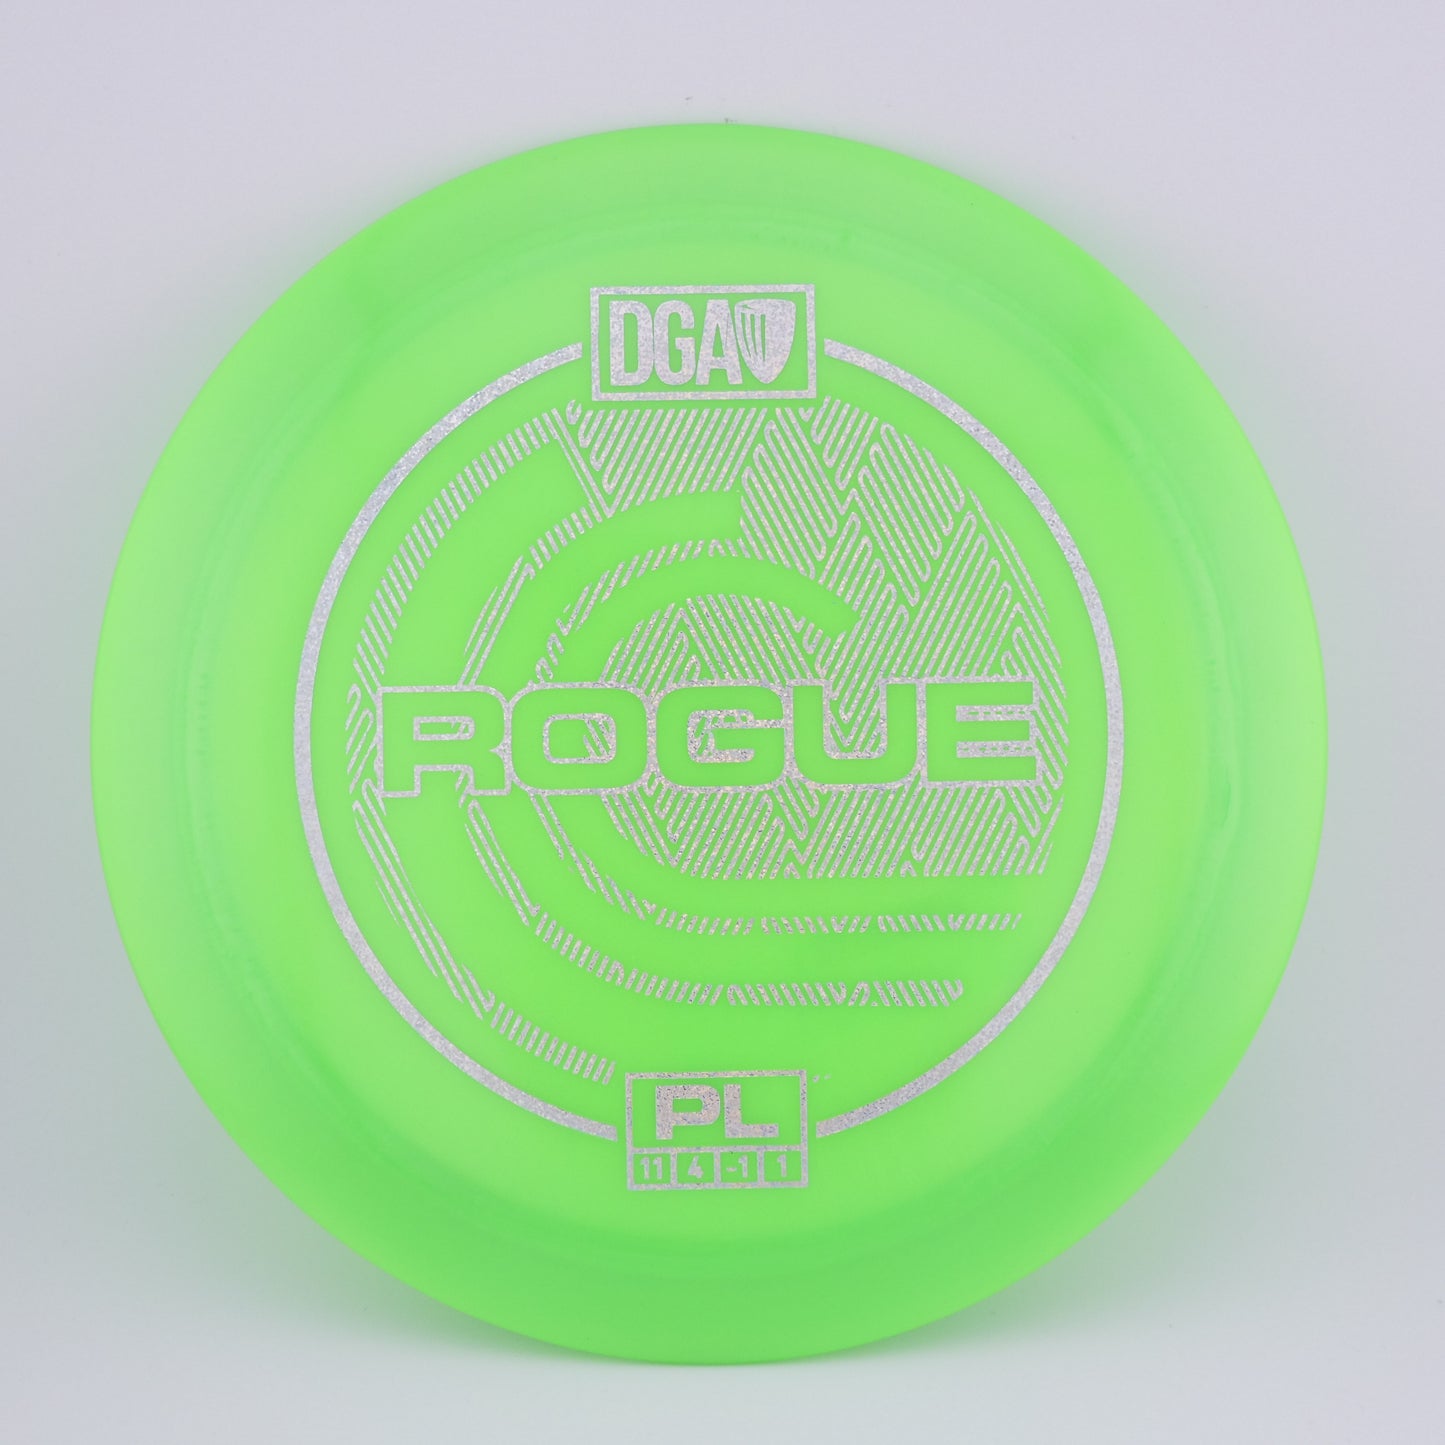 Pro Line Rogue 170-172g